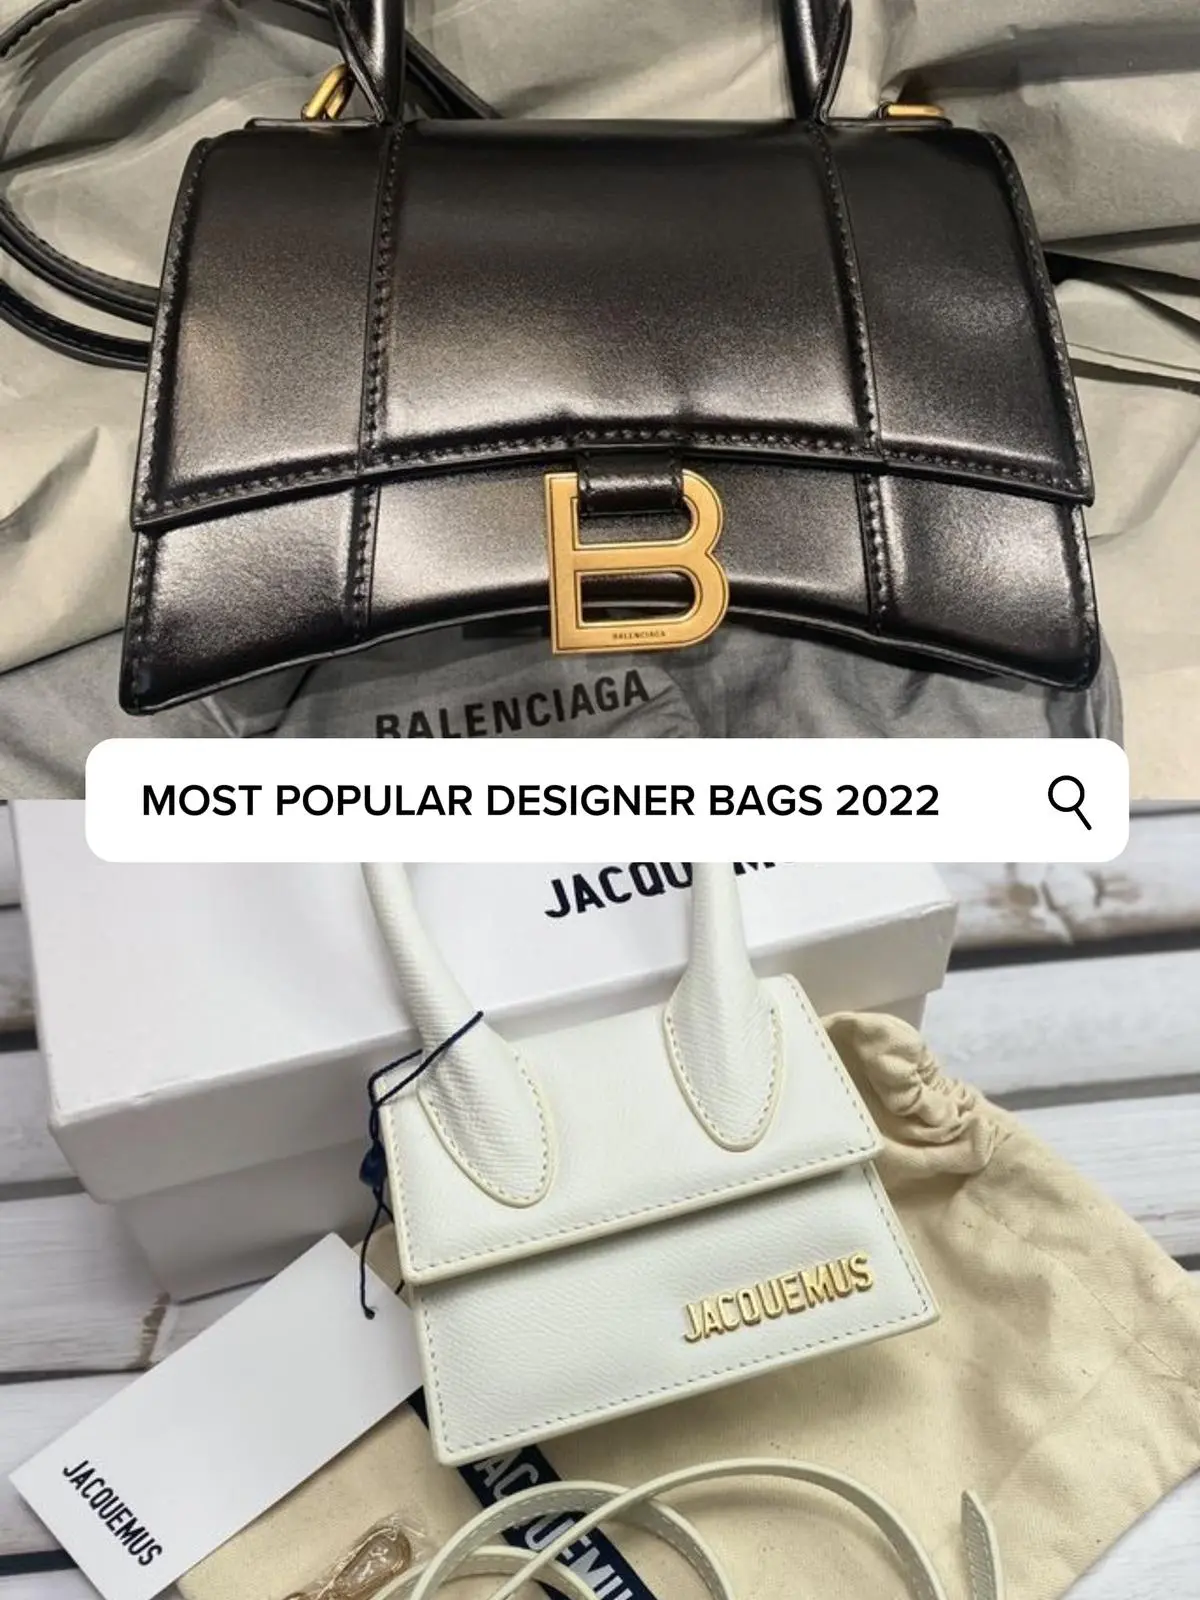 Balenciaga hourglass bag